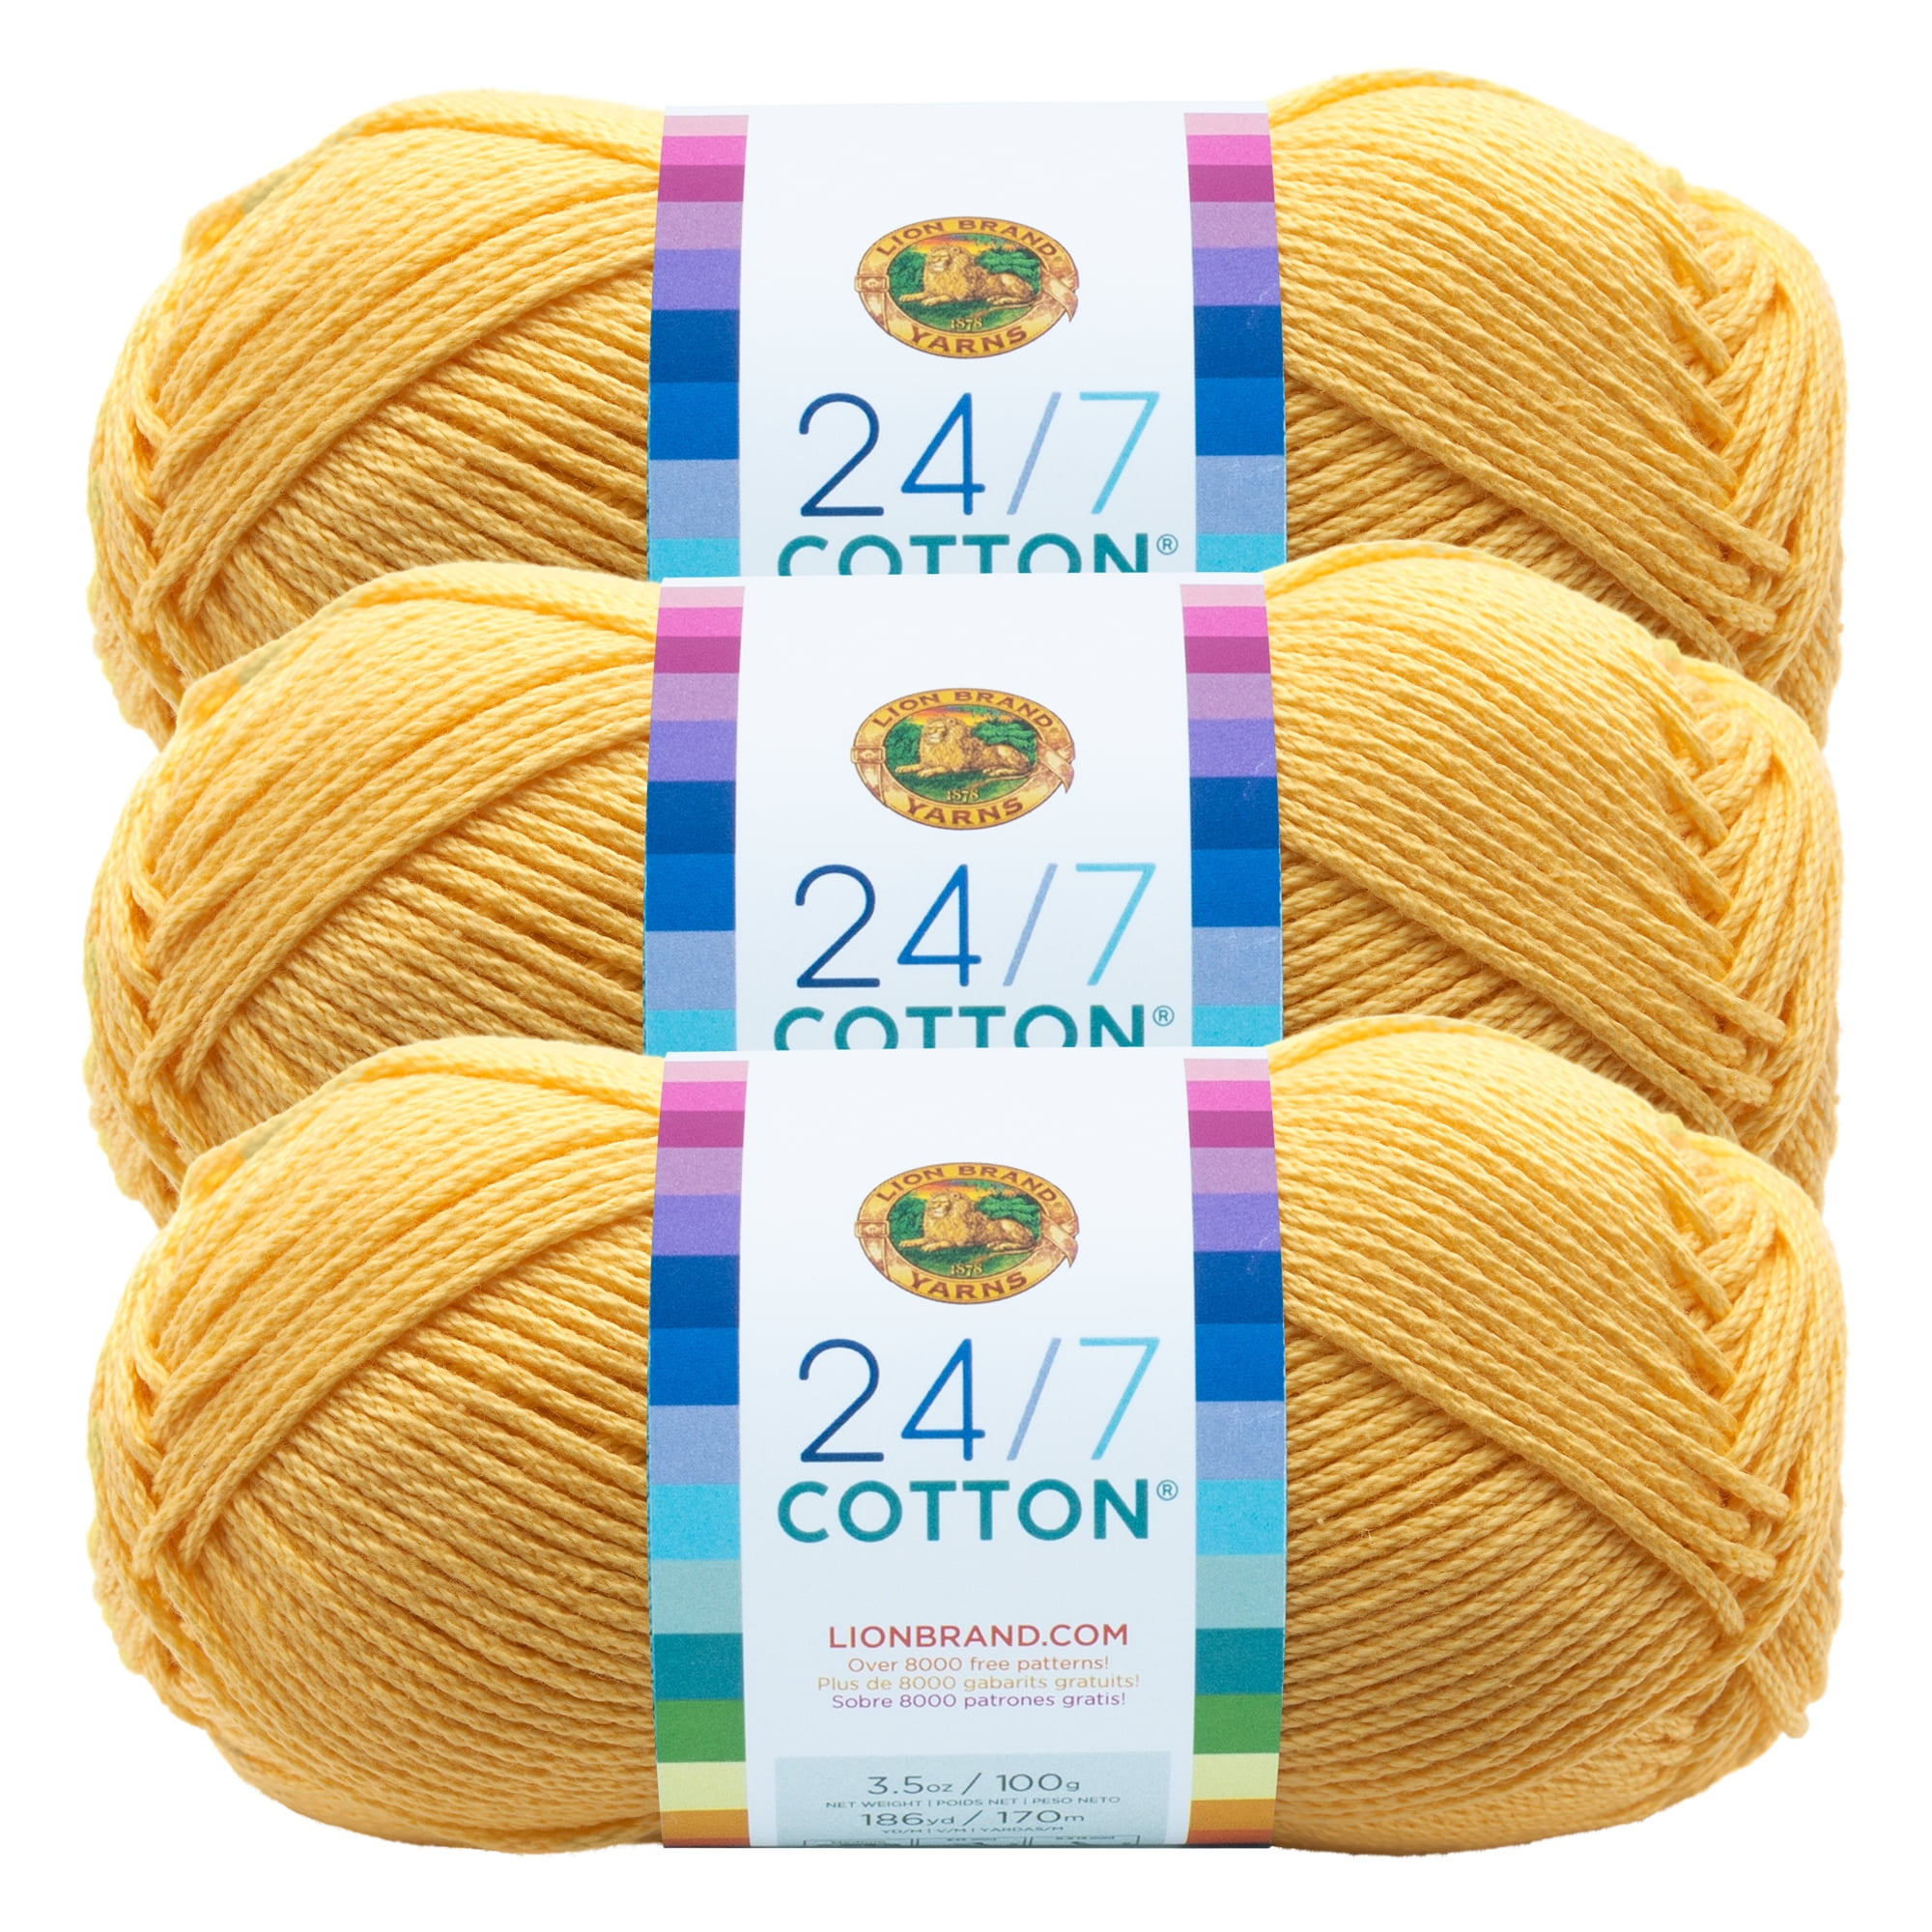 Amber Lion Brand Yarn 761-186G 24/7 Cotton Yarn